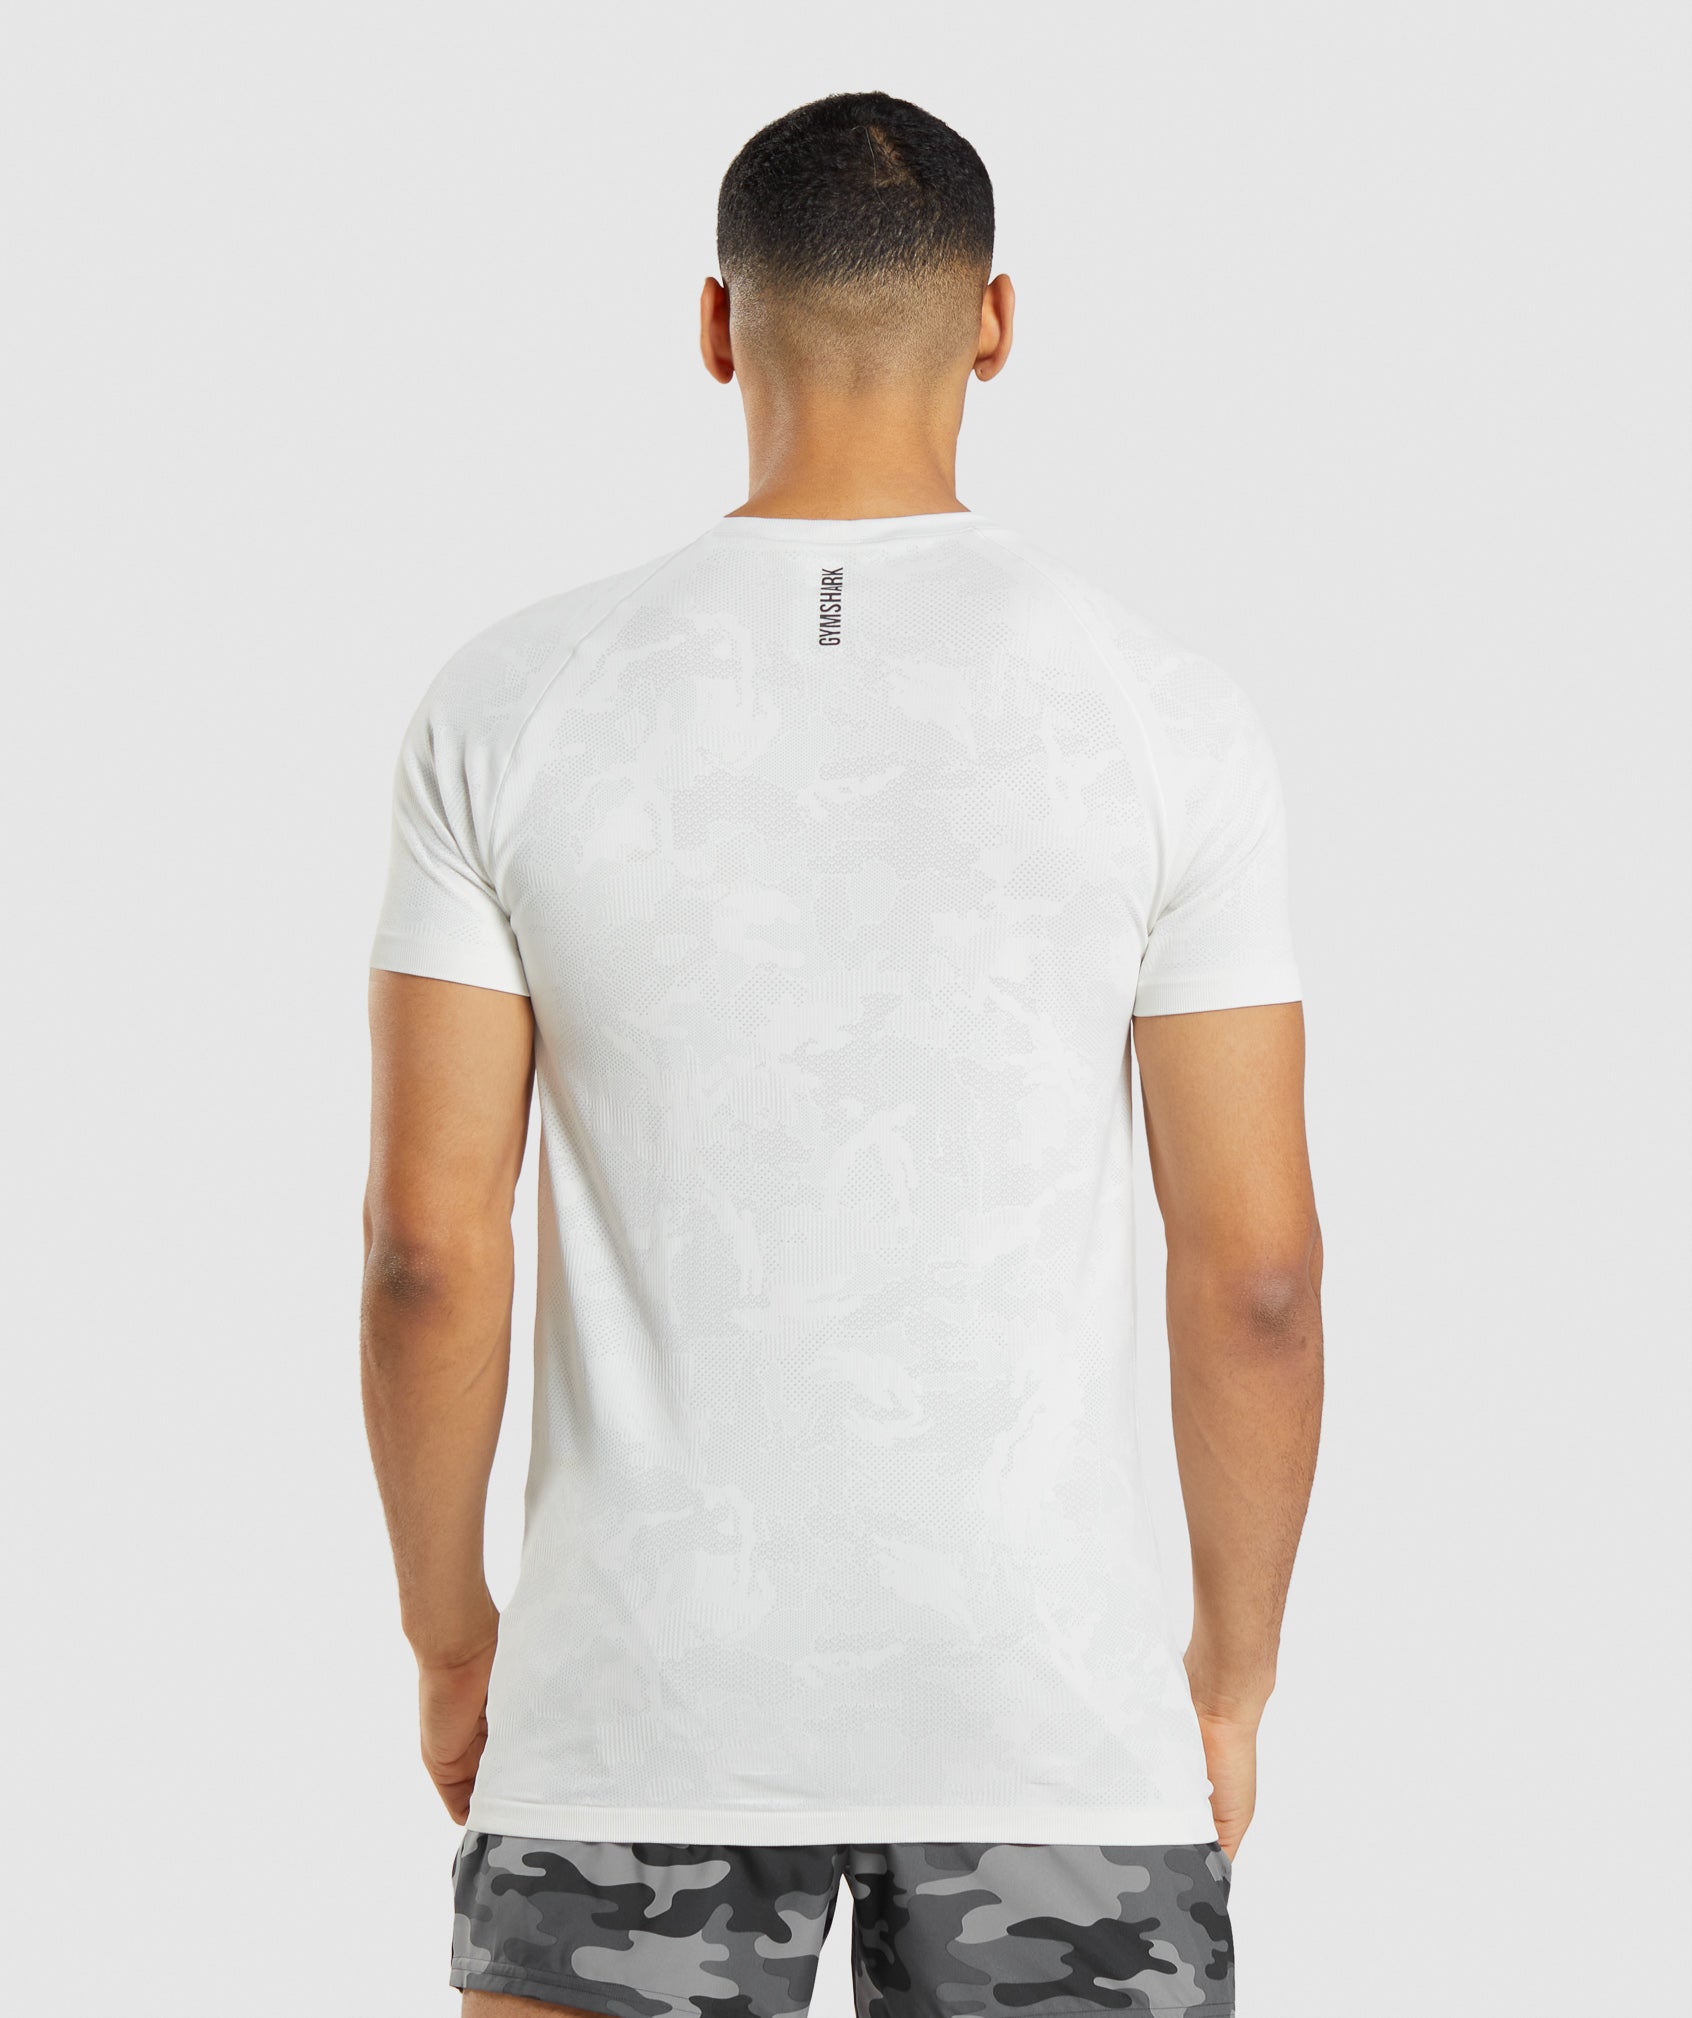 Gymshark Shirt Adult Small White Black Logo Lightweight Cotton Outdoor Tee  Men's